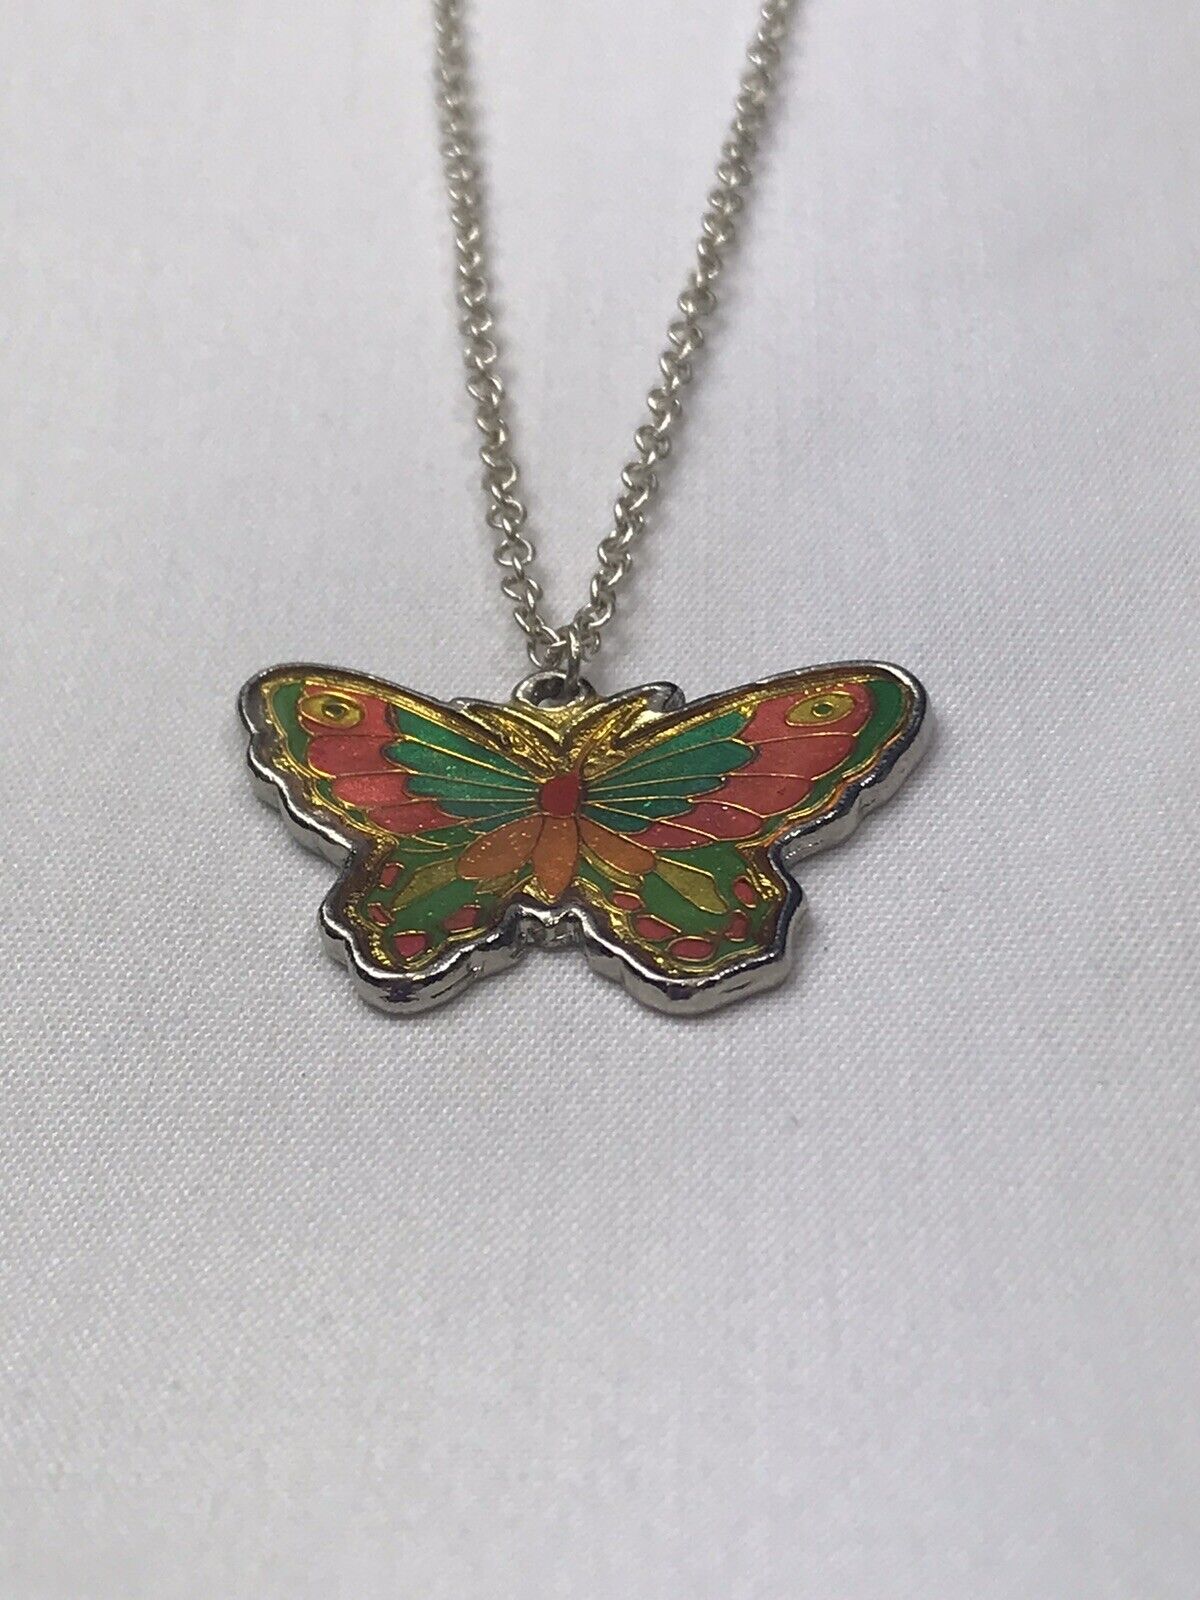 Vintage Enamel Butterfly Pendant Necklace, Silver Tone , 16